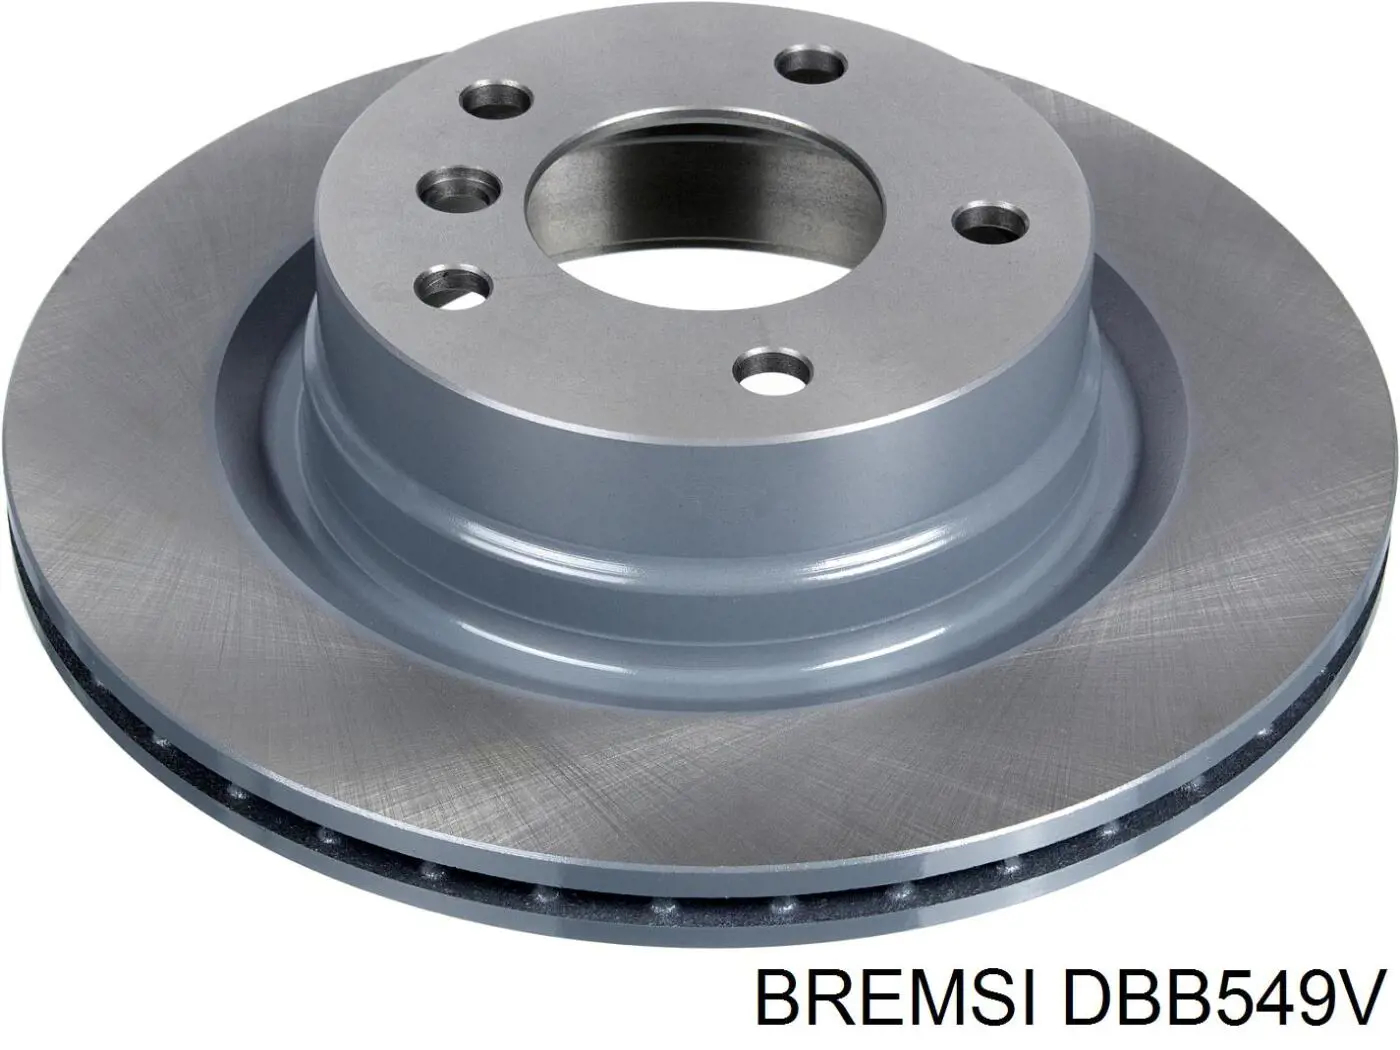 DBB549V Bremsi disco de freno trasero